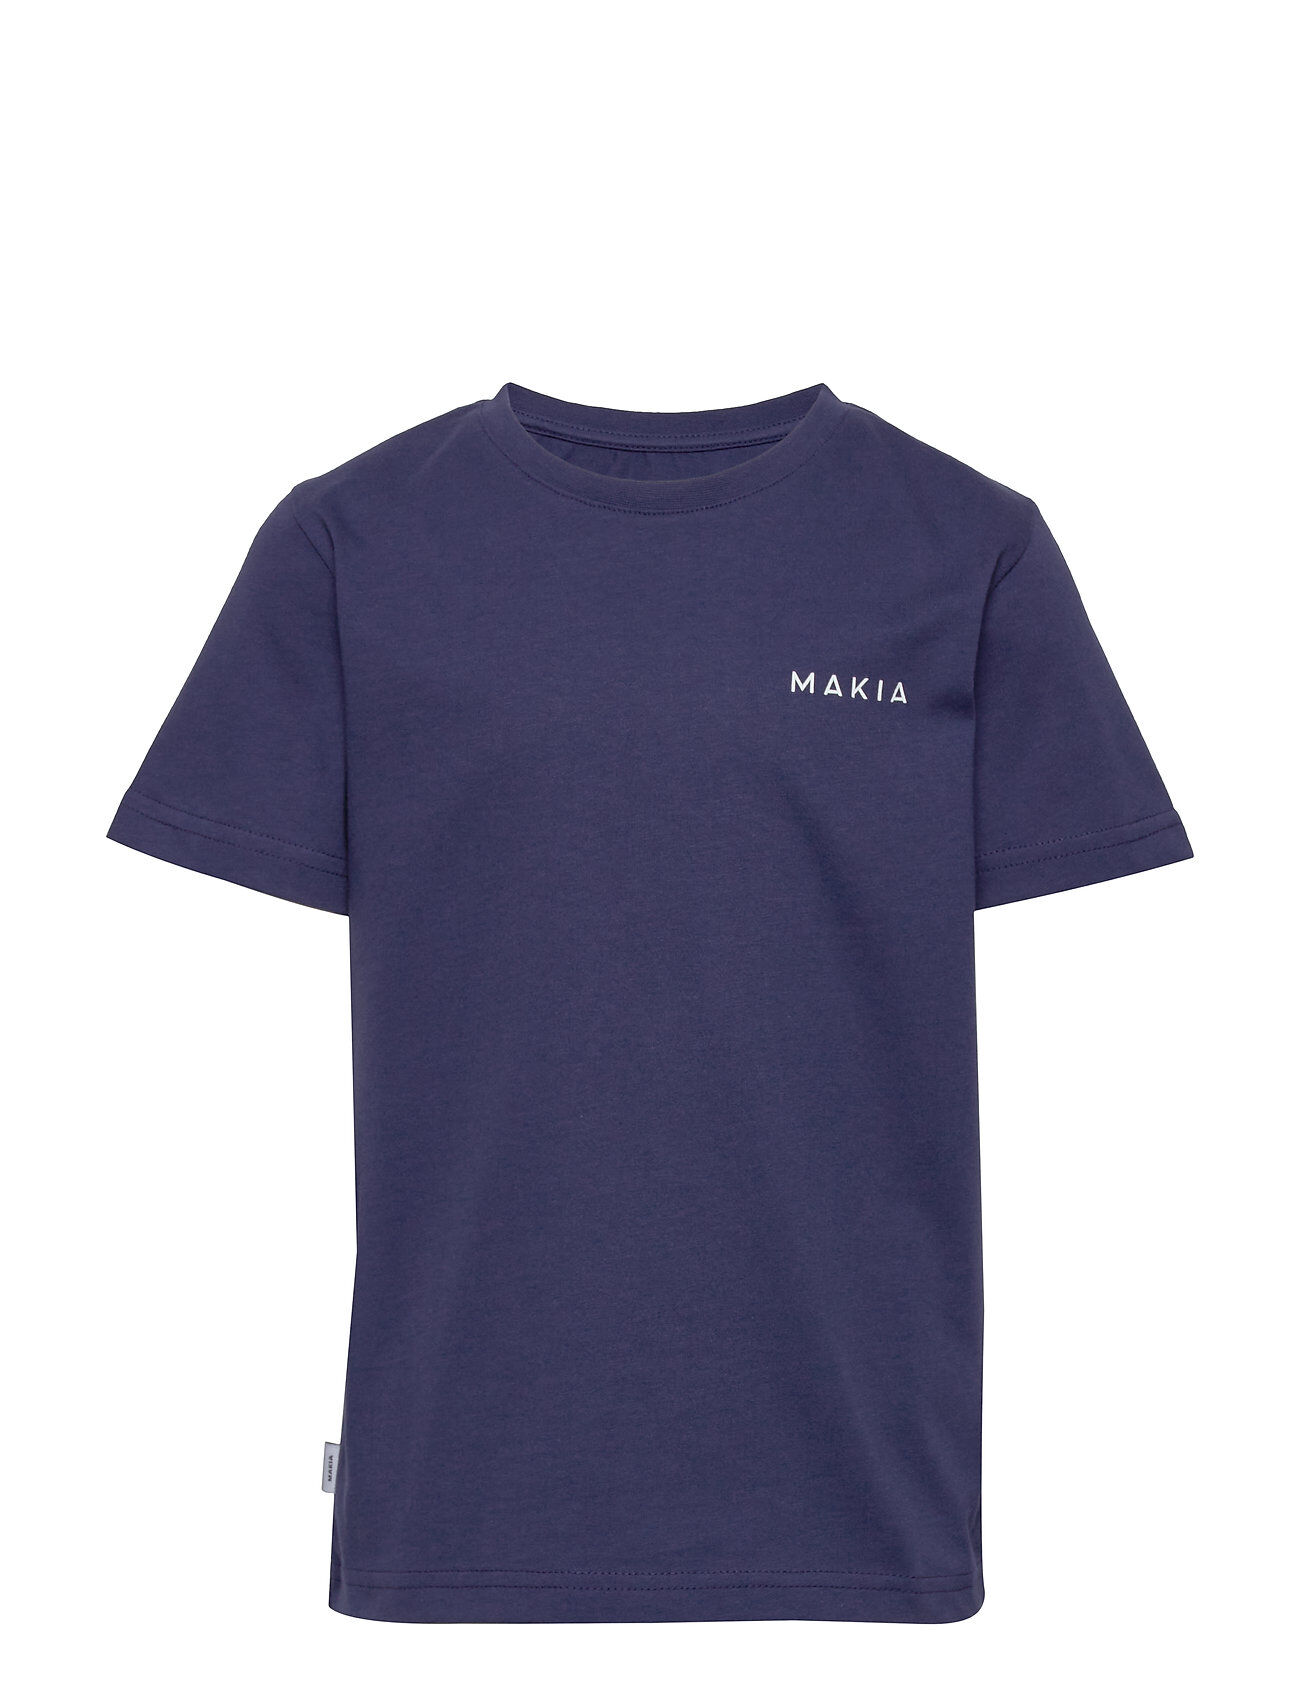 Makia Trim T-Shirt T-shirts Short-sleeved Blå Makia